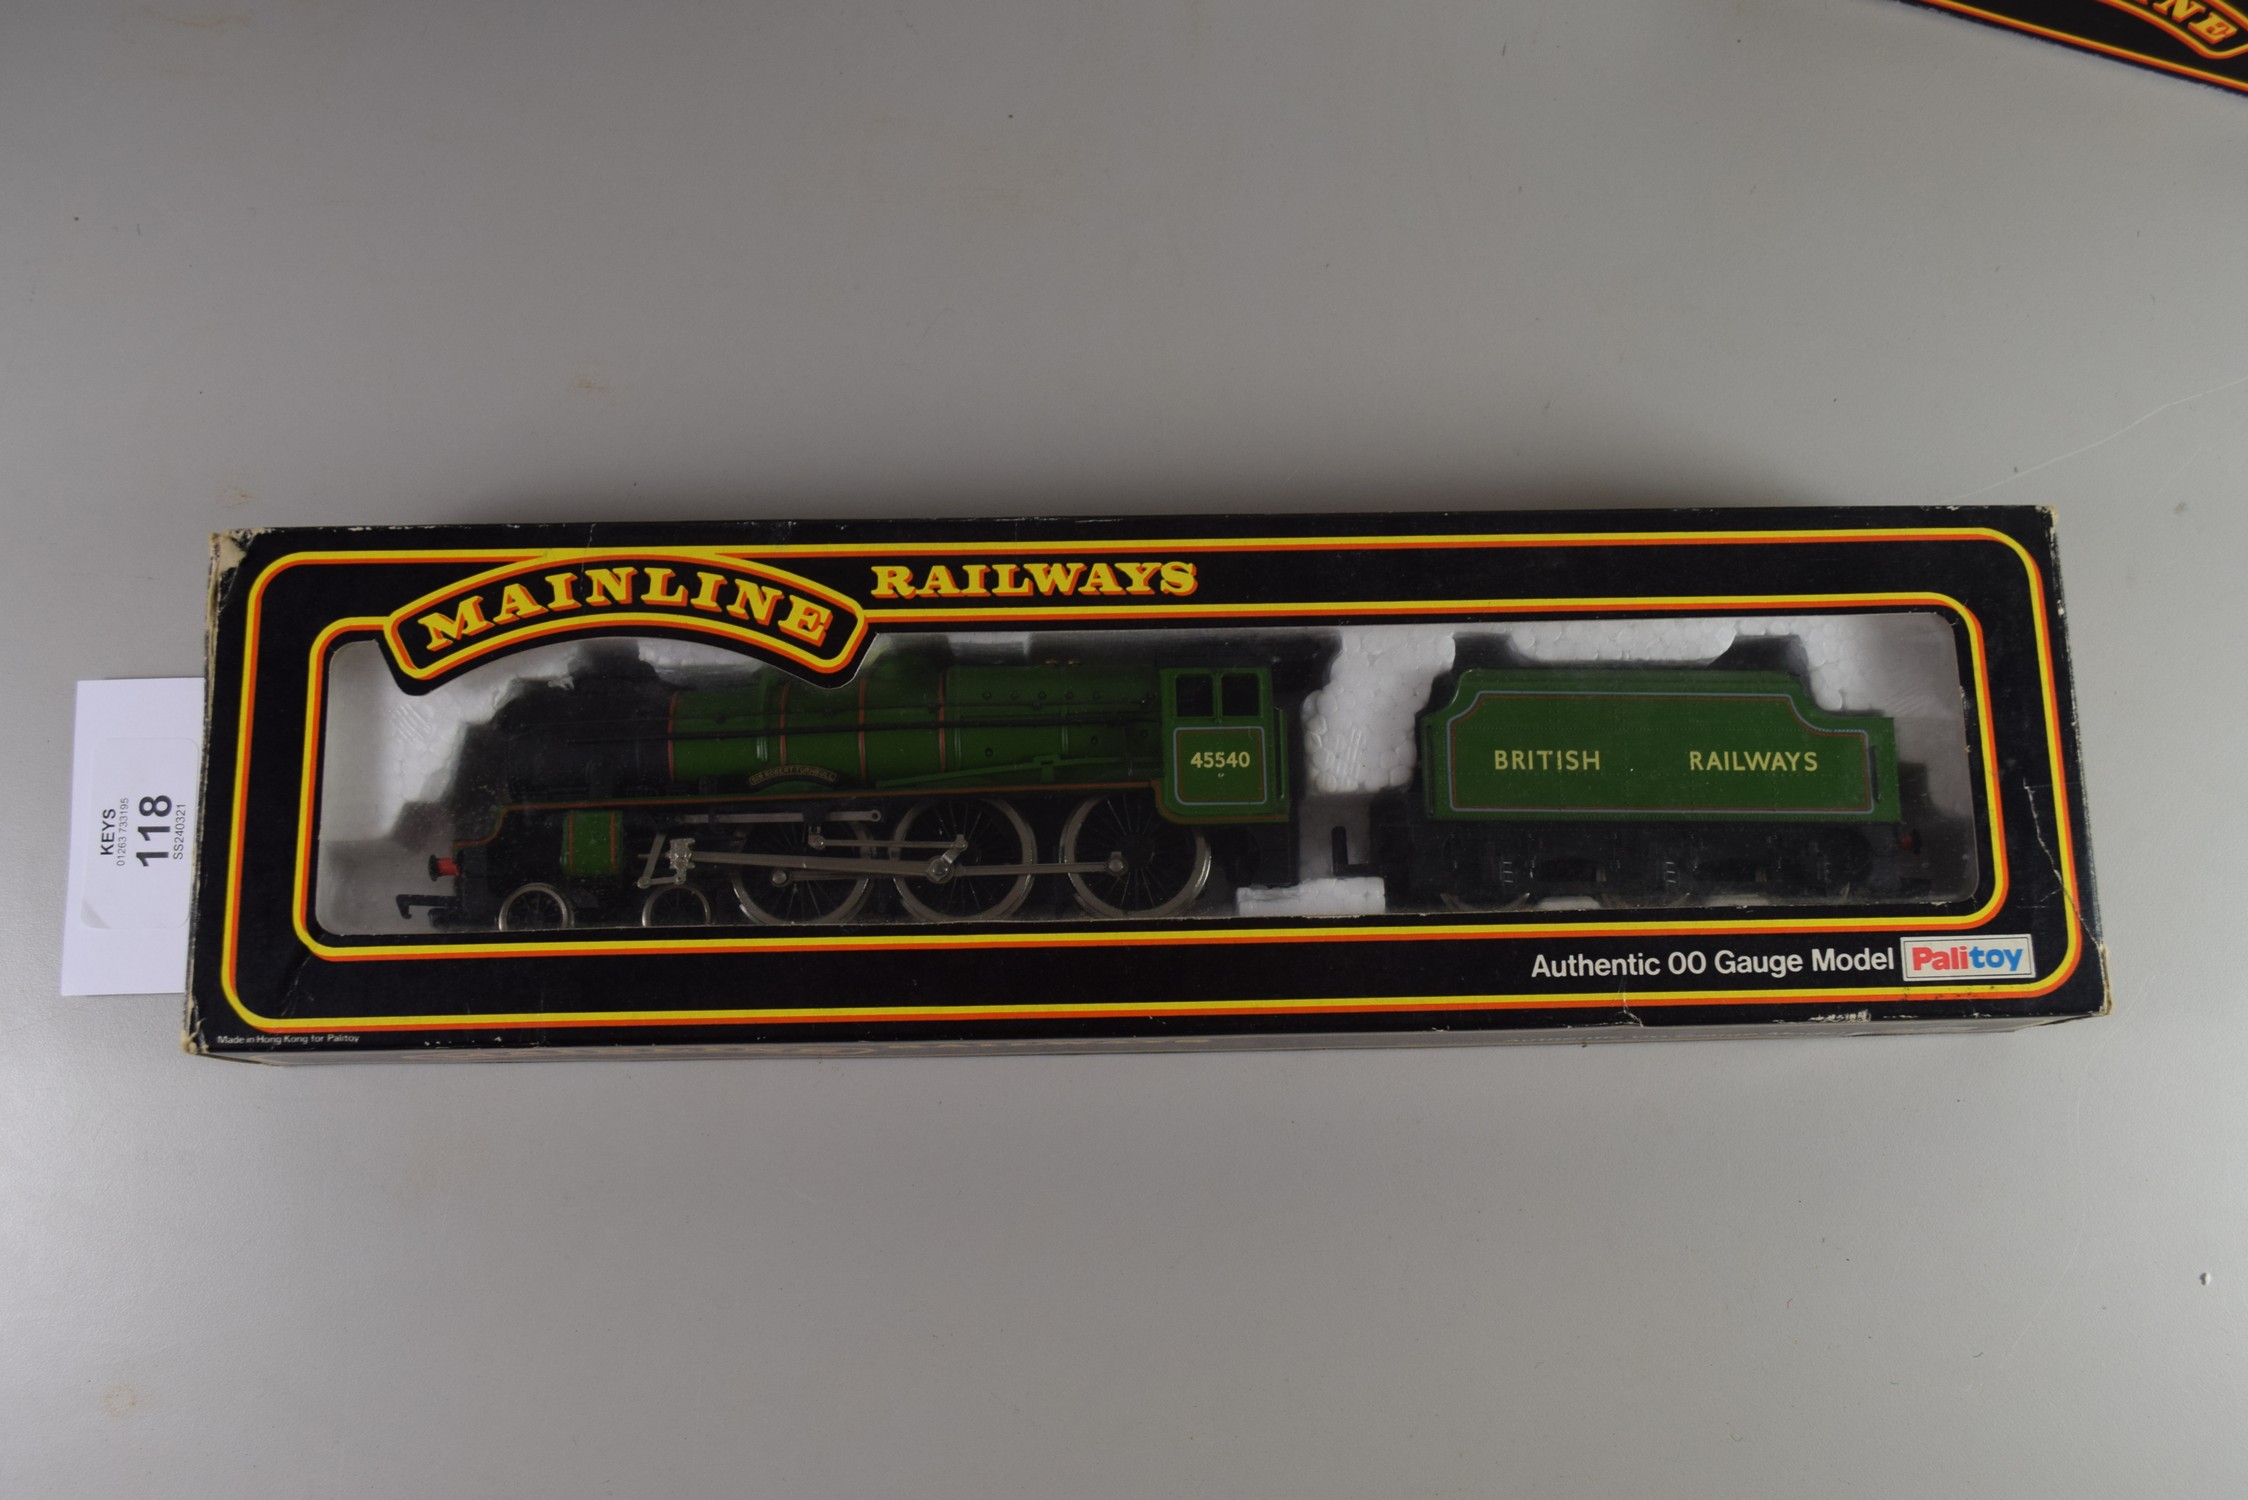 Boxed Mainline Railways 00 gauge "Sir Robert Turnbull" locomotive, No 45540